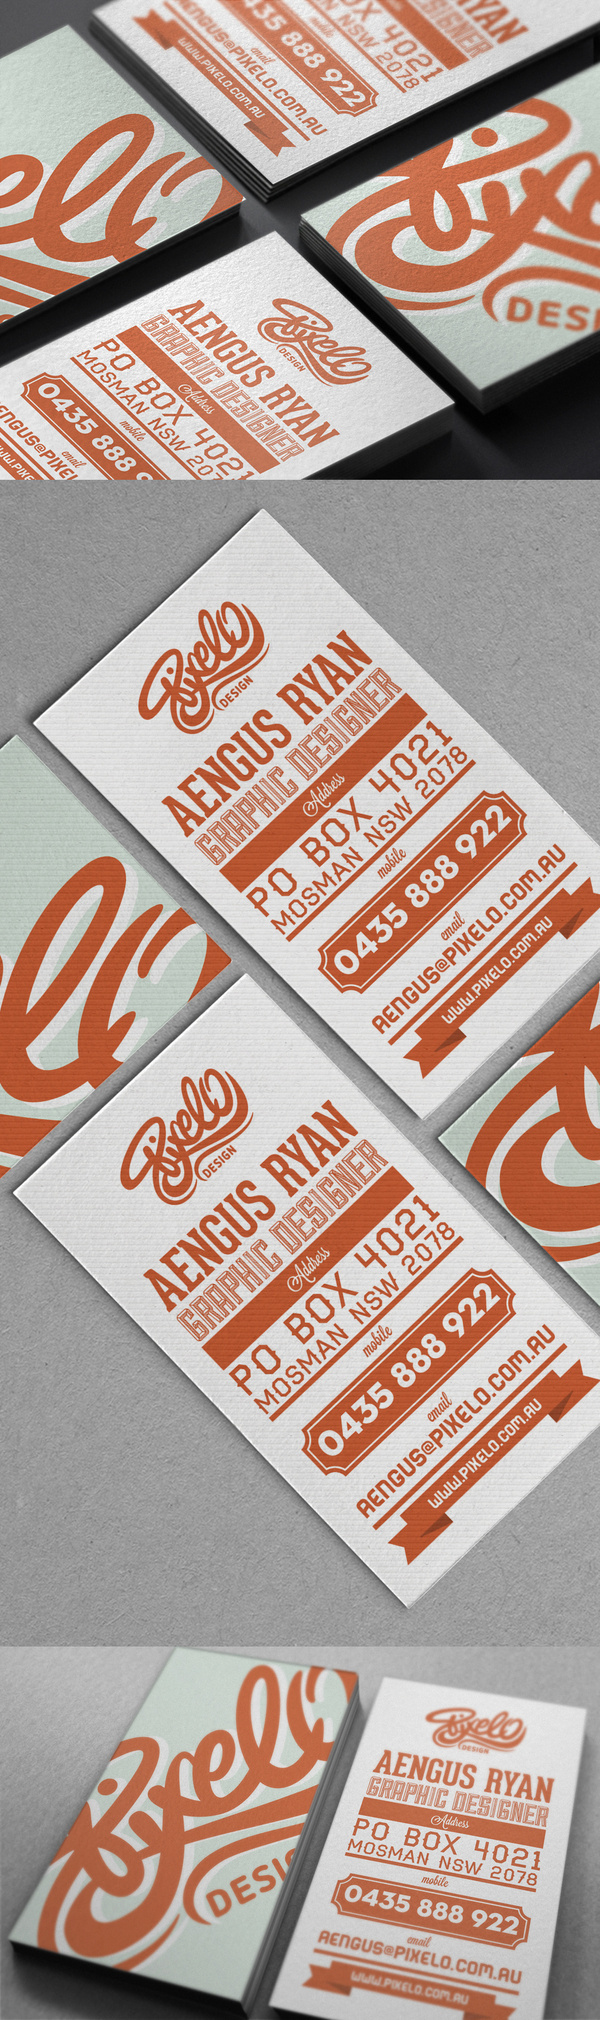 Business card design idea #323: Pixelo Corporate identity // Branding #business #branding #design #retro #orange #logo #cards